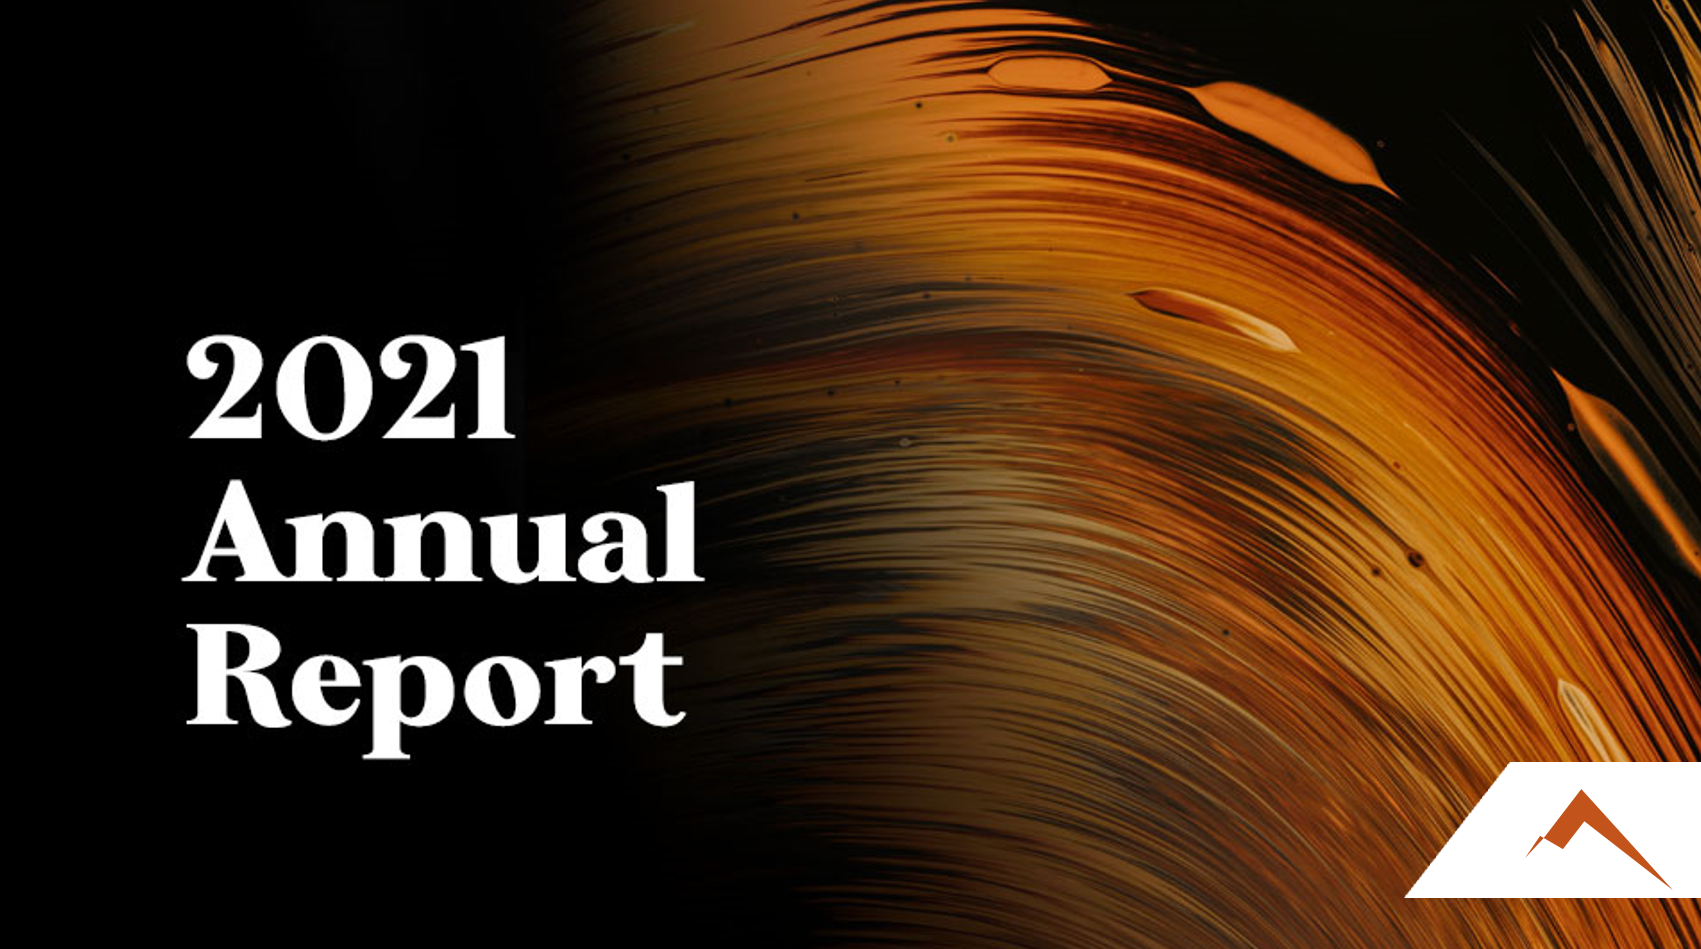 2022 Annual Report image - CP